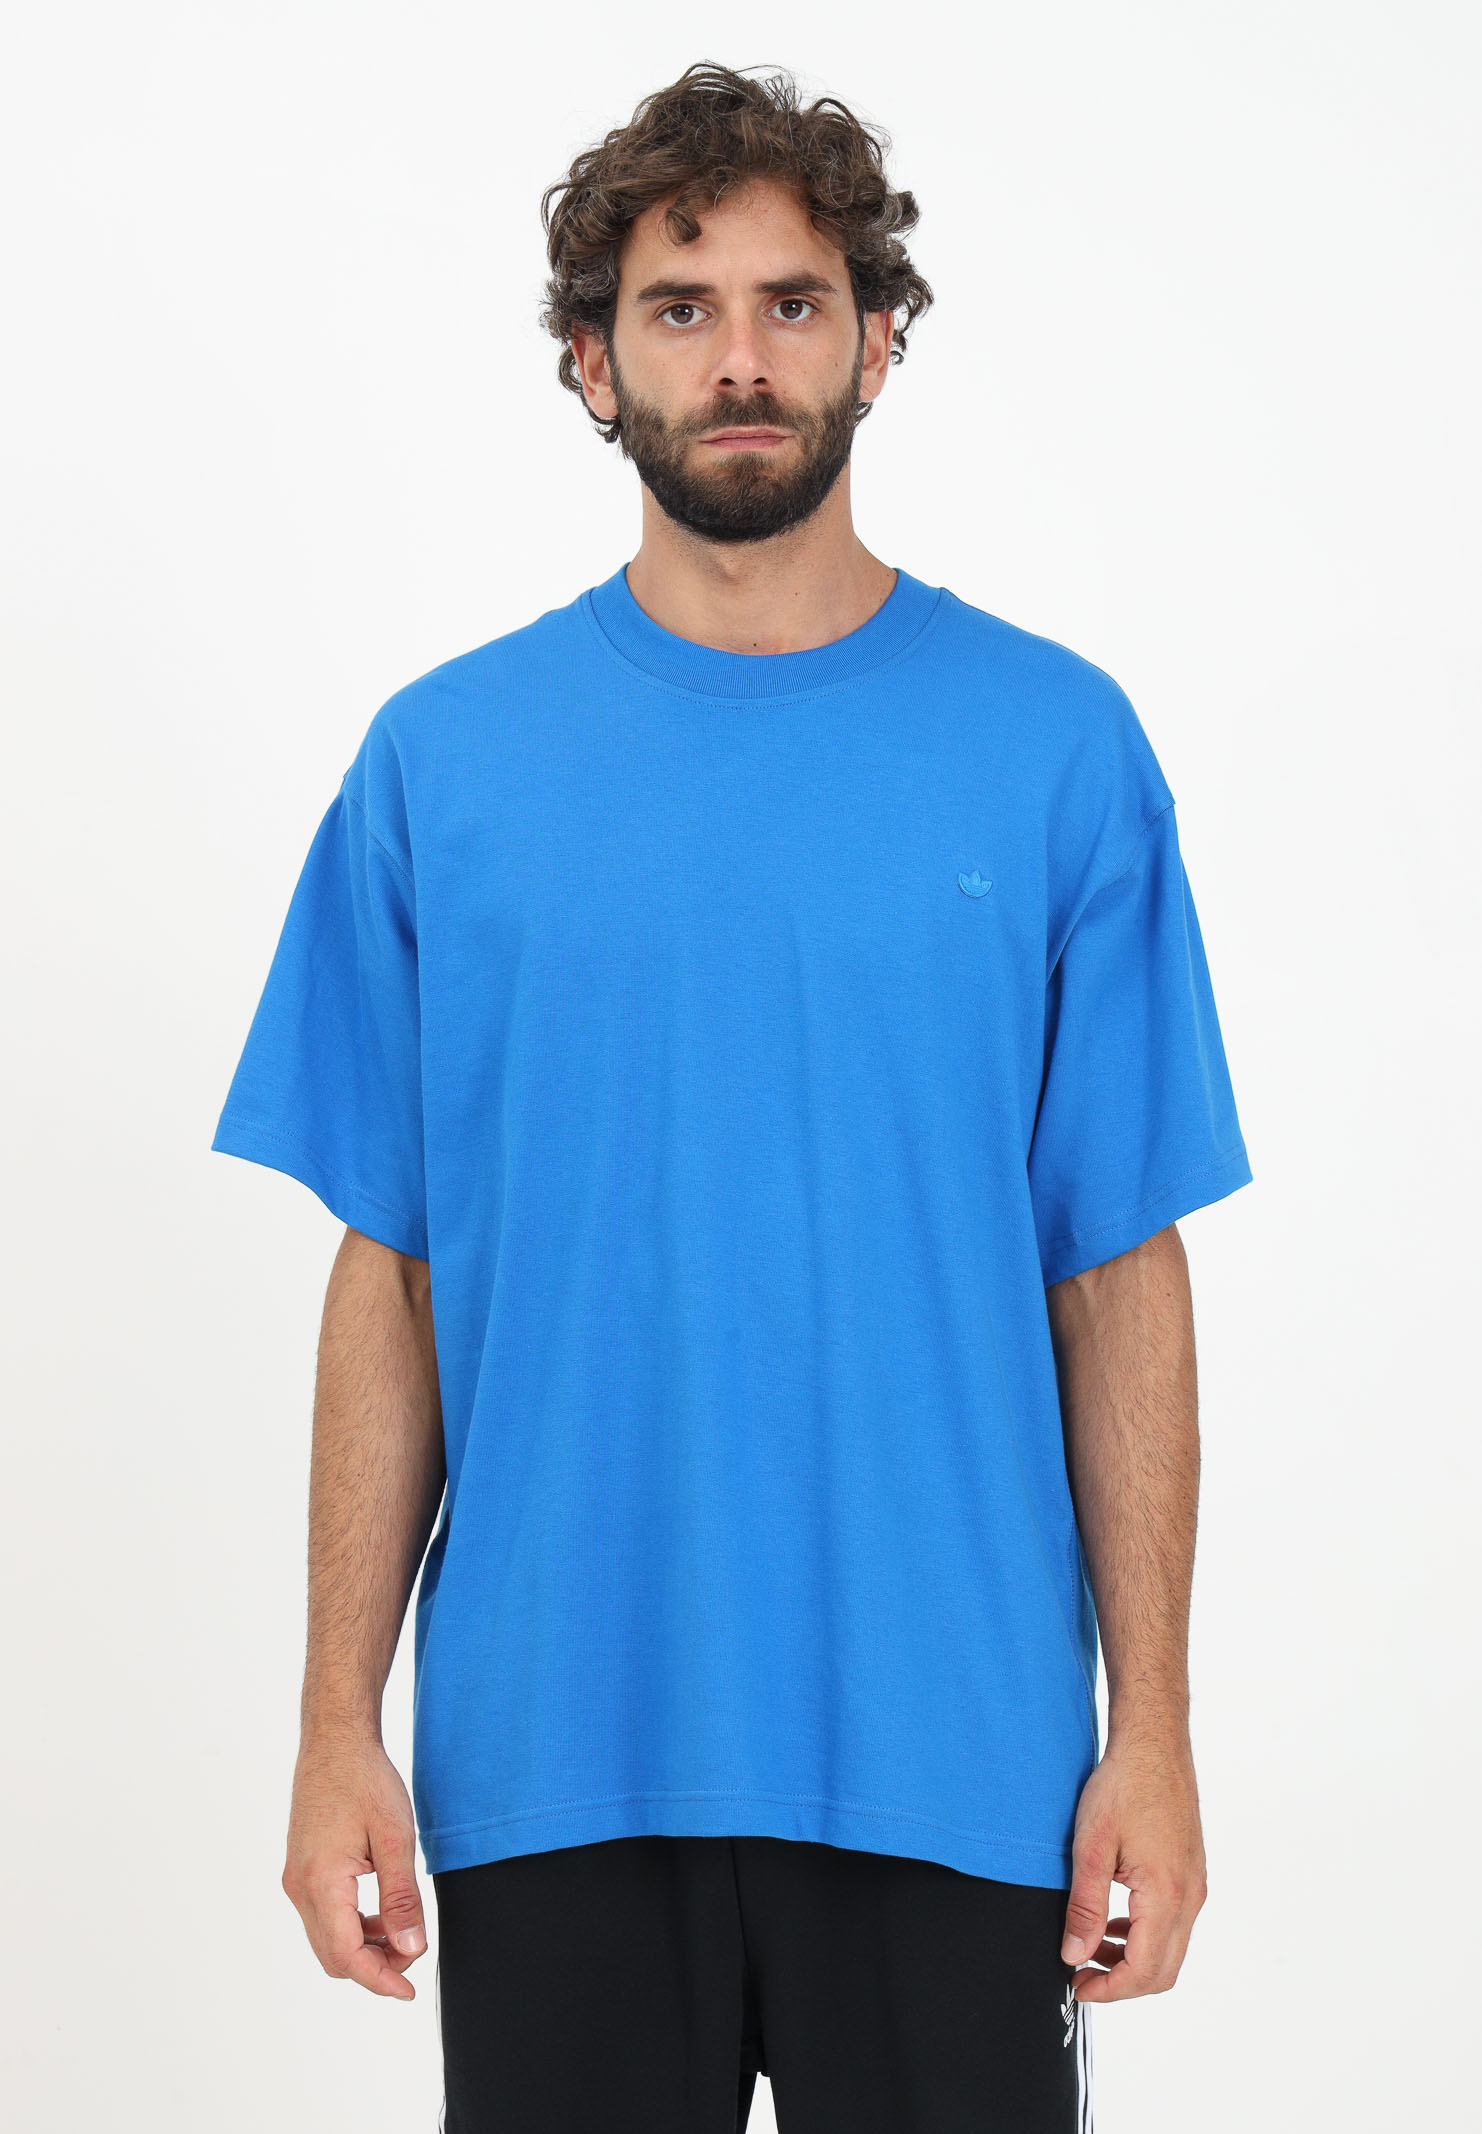 Kan ignoreres vare Hændelse Adicolor Contempo light blue t-shirt for men - ADIDAS ORIGINALS - Pavidas